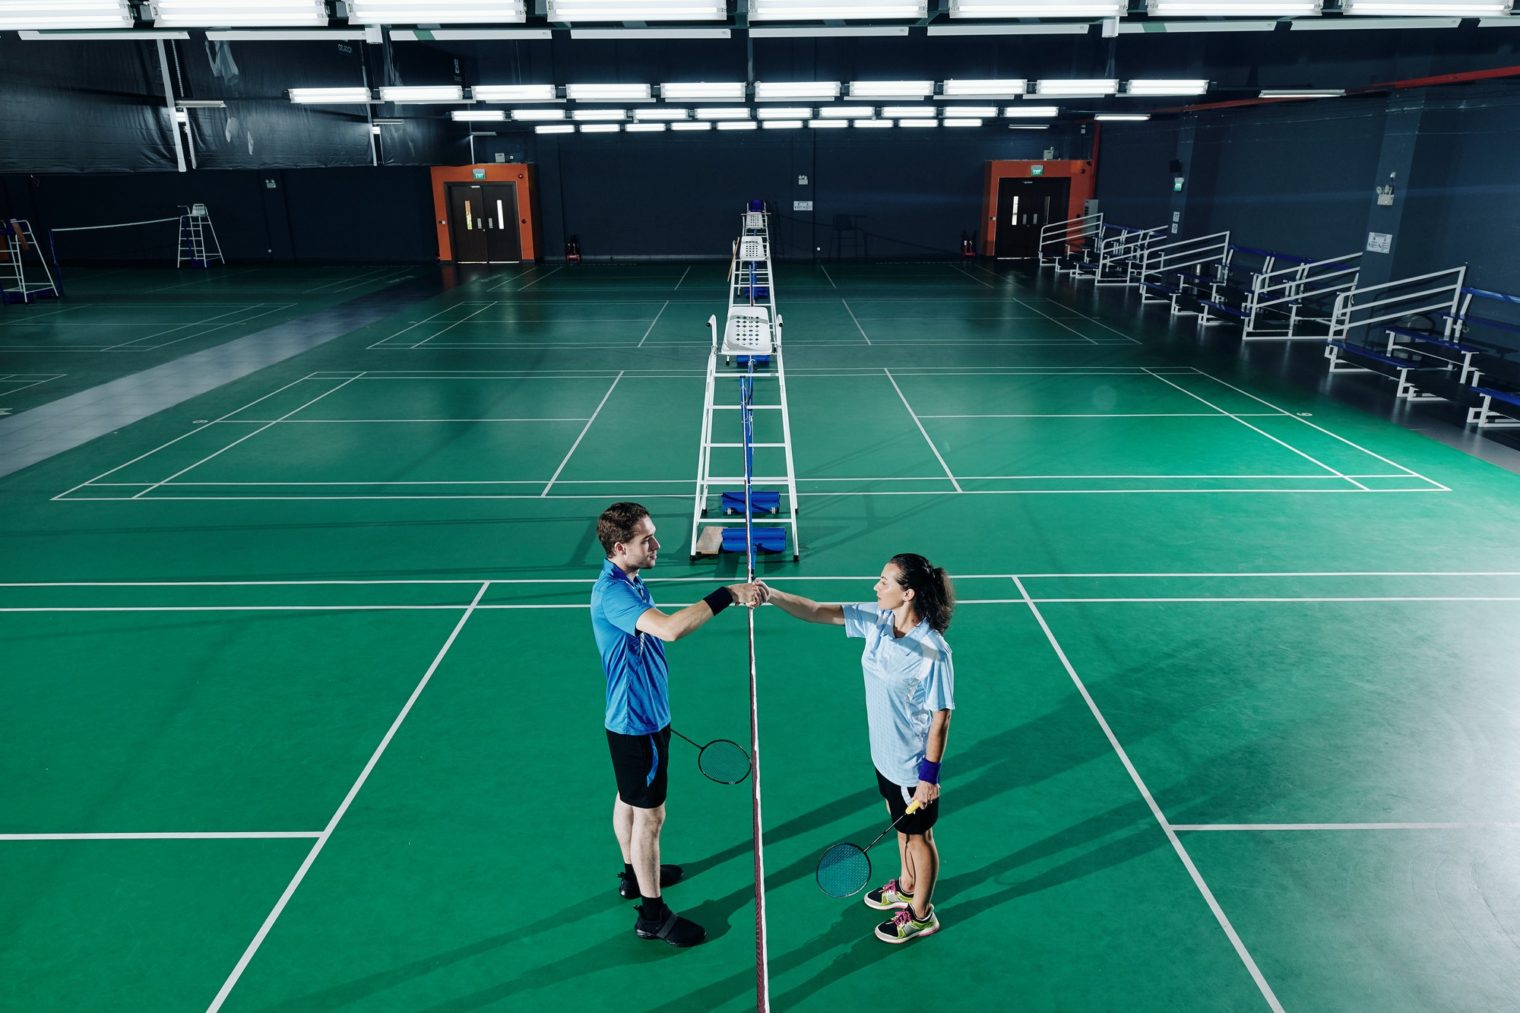 Badminton players training in gymnasium